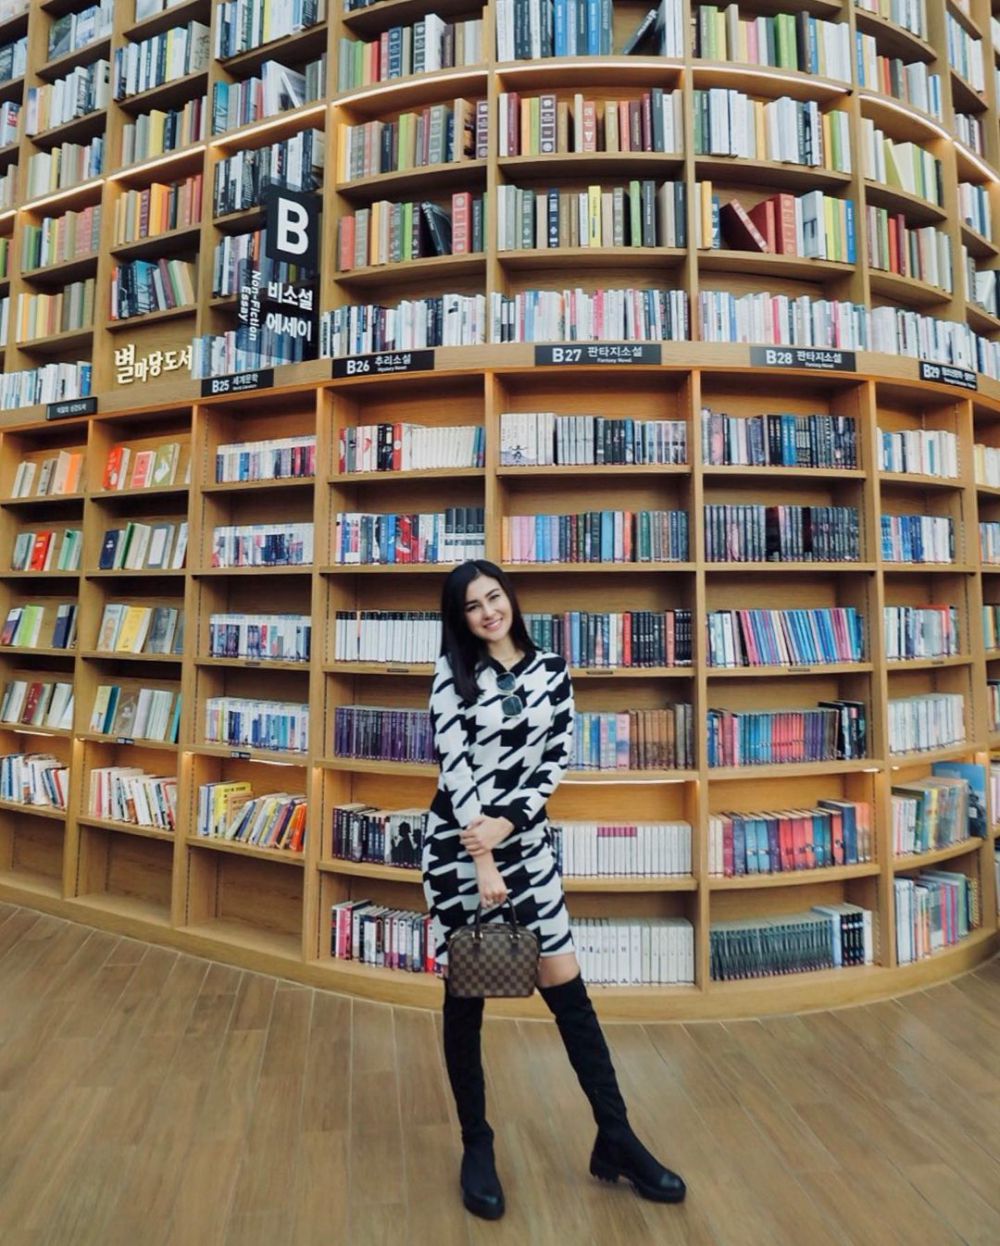 8 Artis Berpose di Starfield Library Korea, Instagramable!